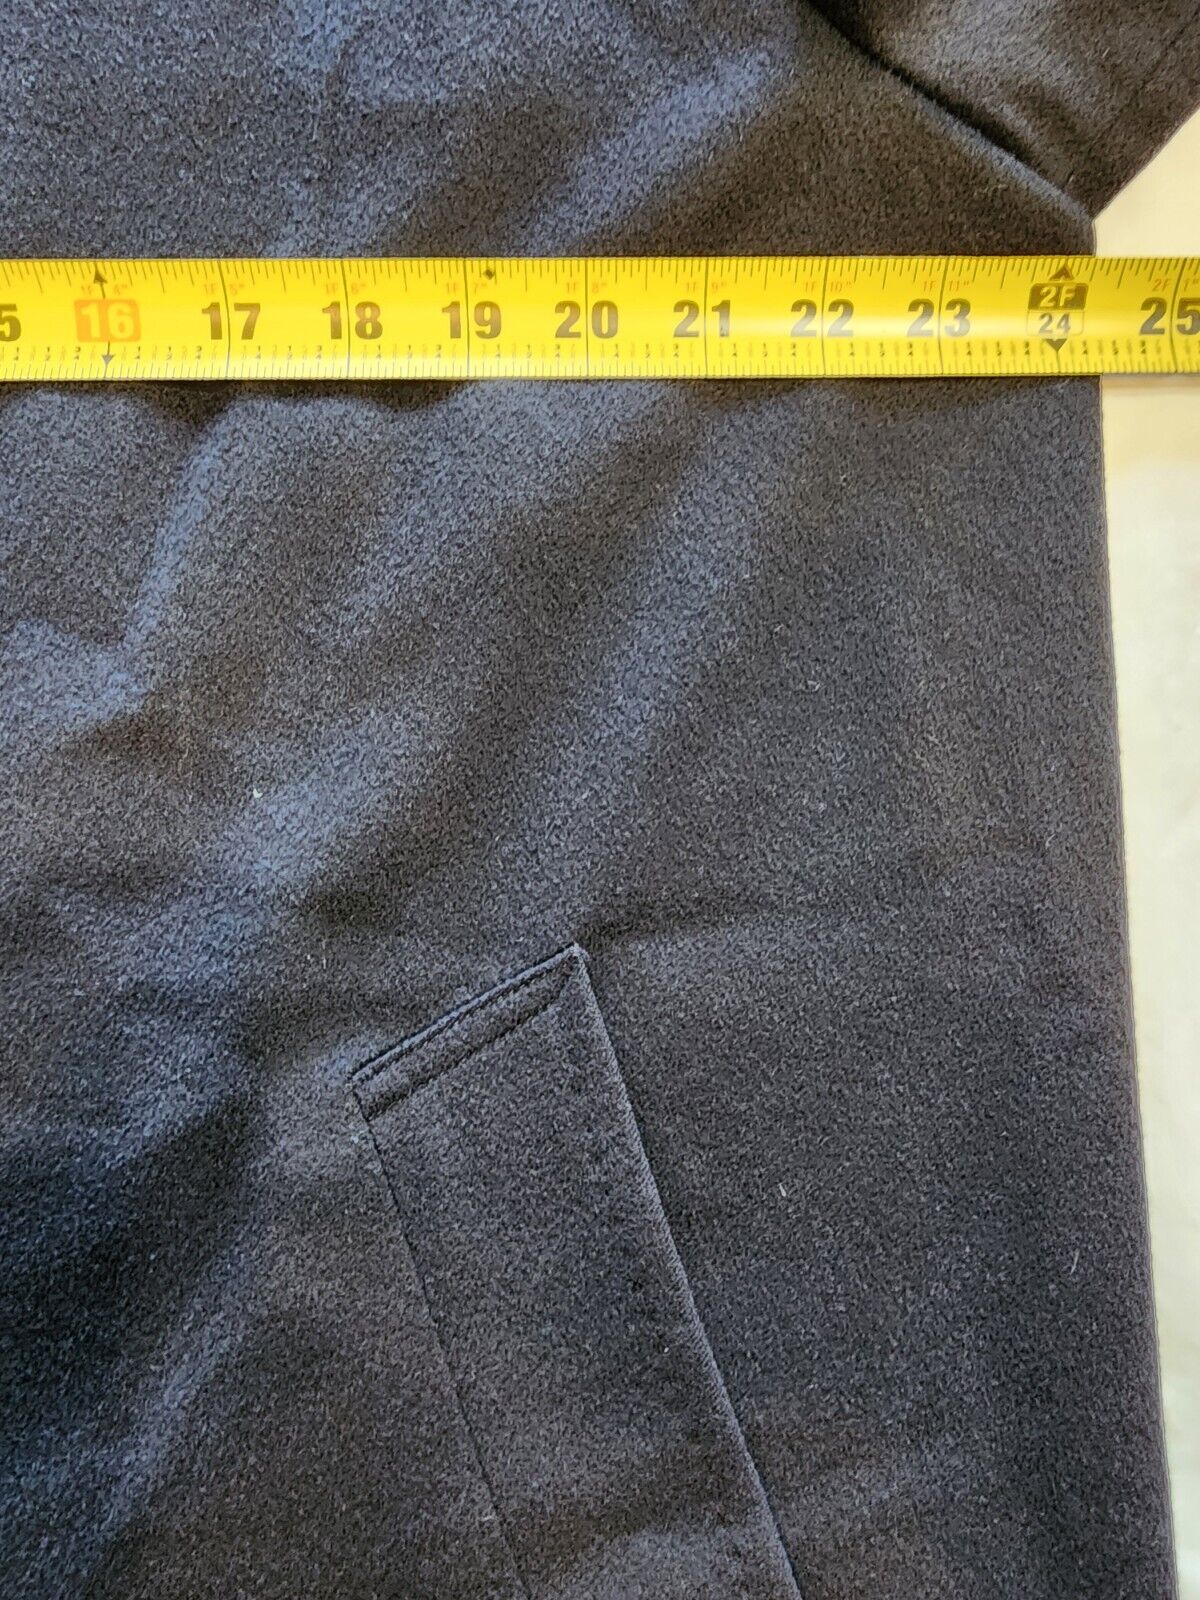 Windsor Fine Clothing Overcoat Trench Coat Mens 5… - image 18